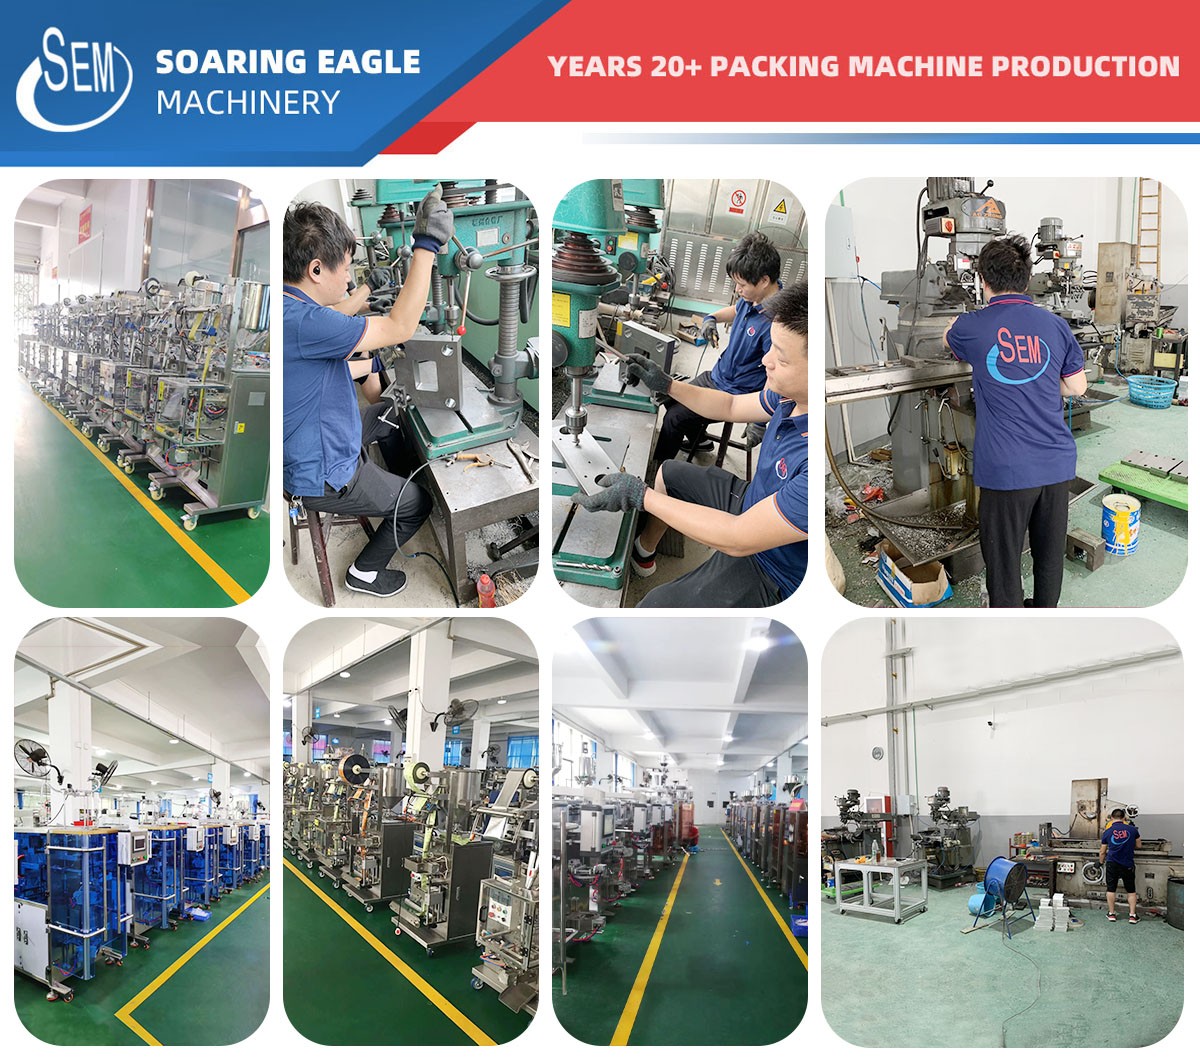 Factory direct sale lowest price sachet sugar / coffee / salt / powder forming filling sealing packing machine